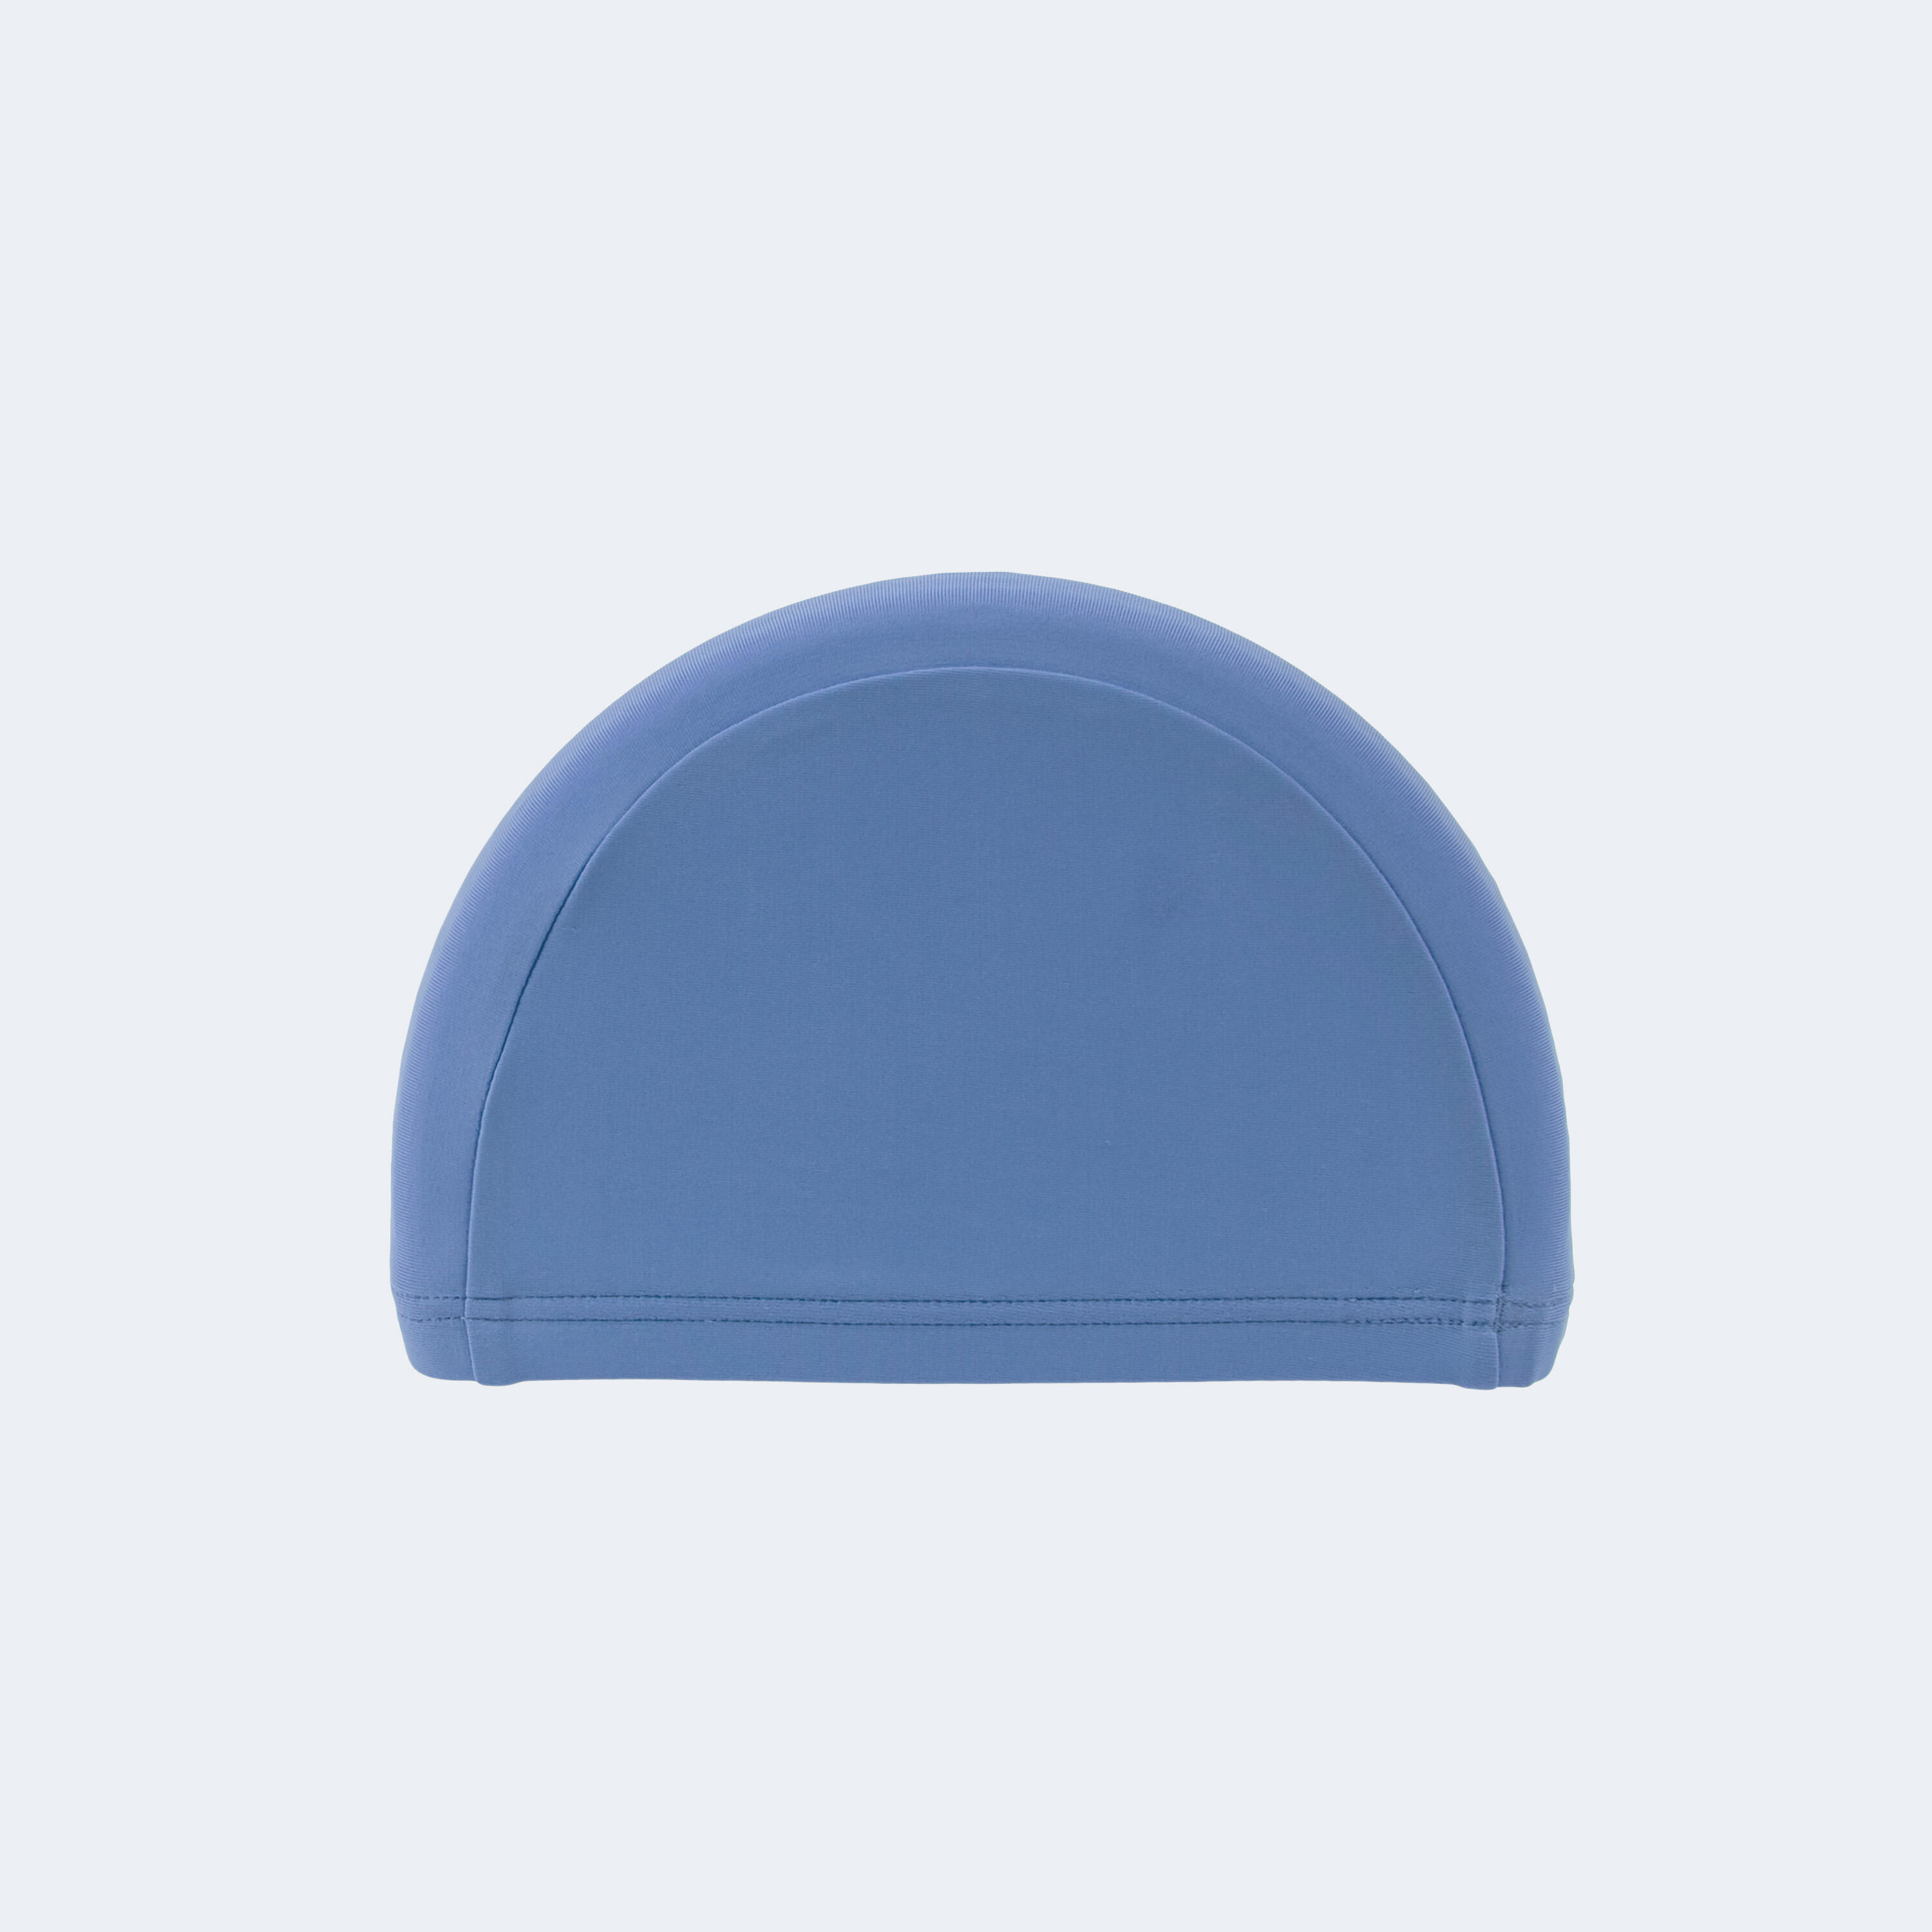 Mesh swimming cap - Plain fabric - Size S - Blue 2/2